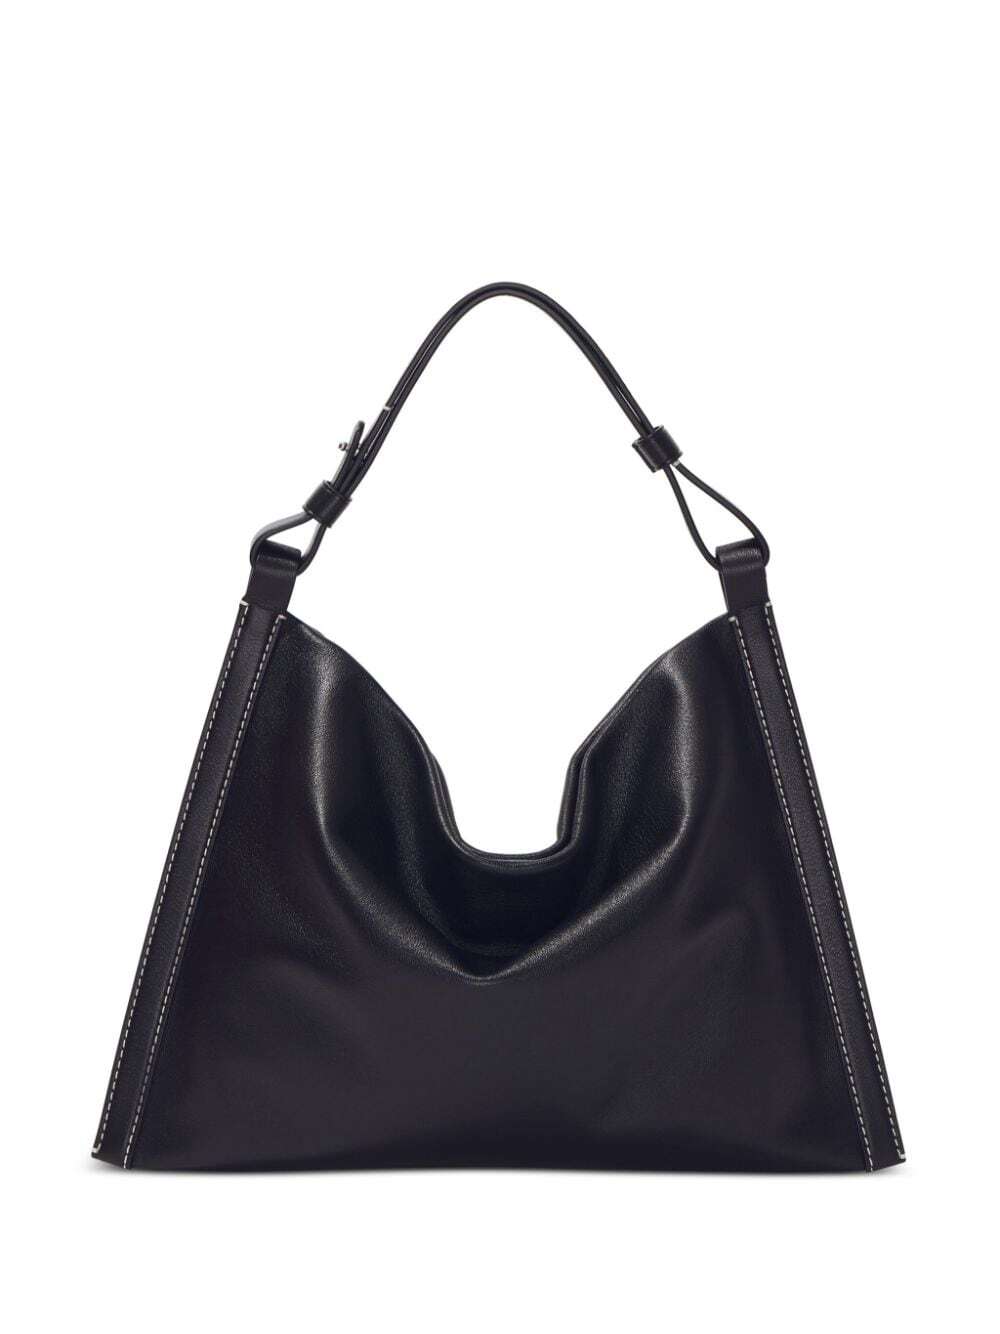 Proenza Schouler White Label Minetta leather shoulder bag - Black